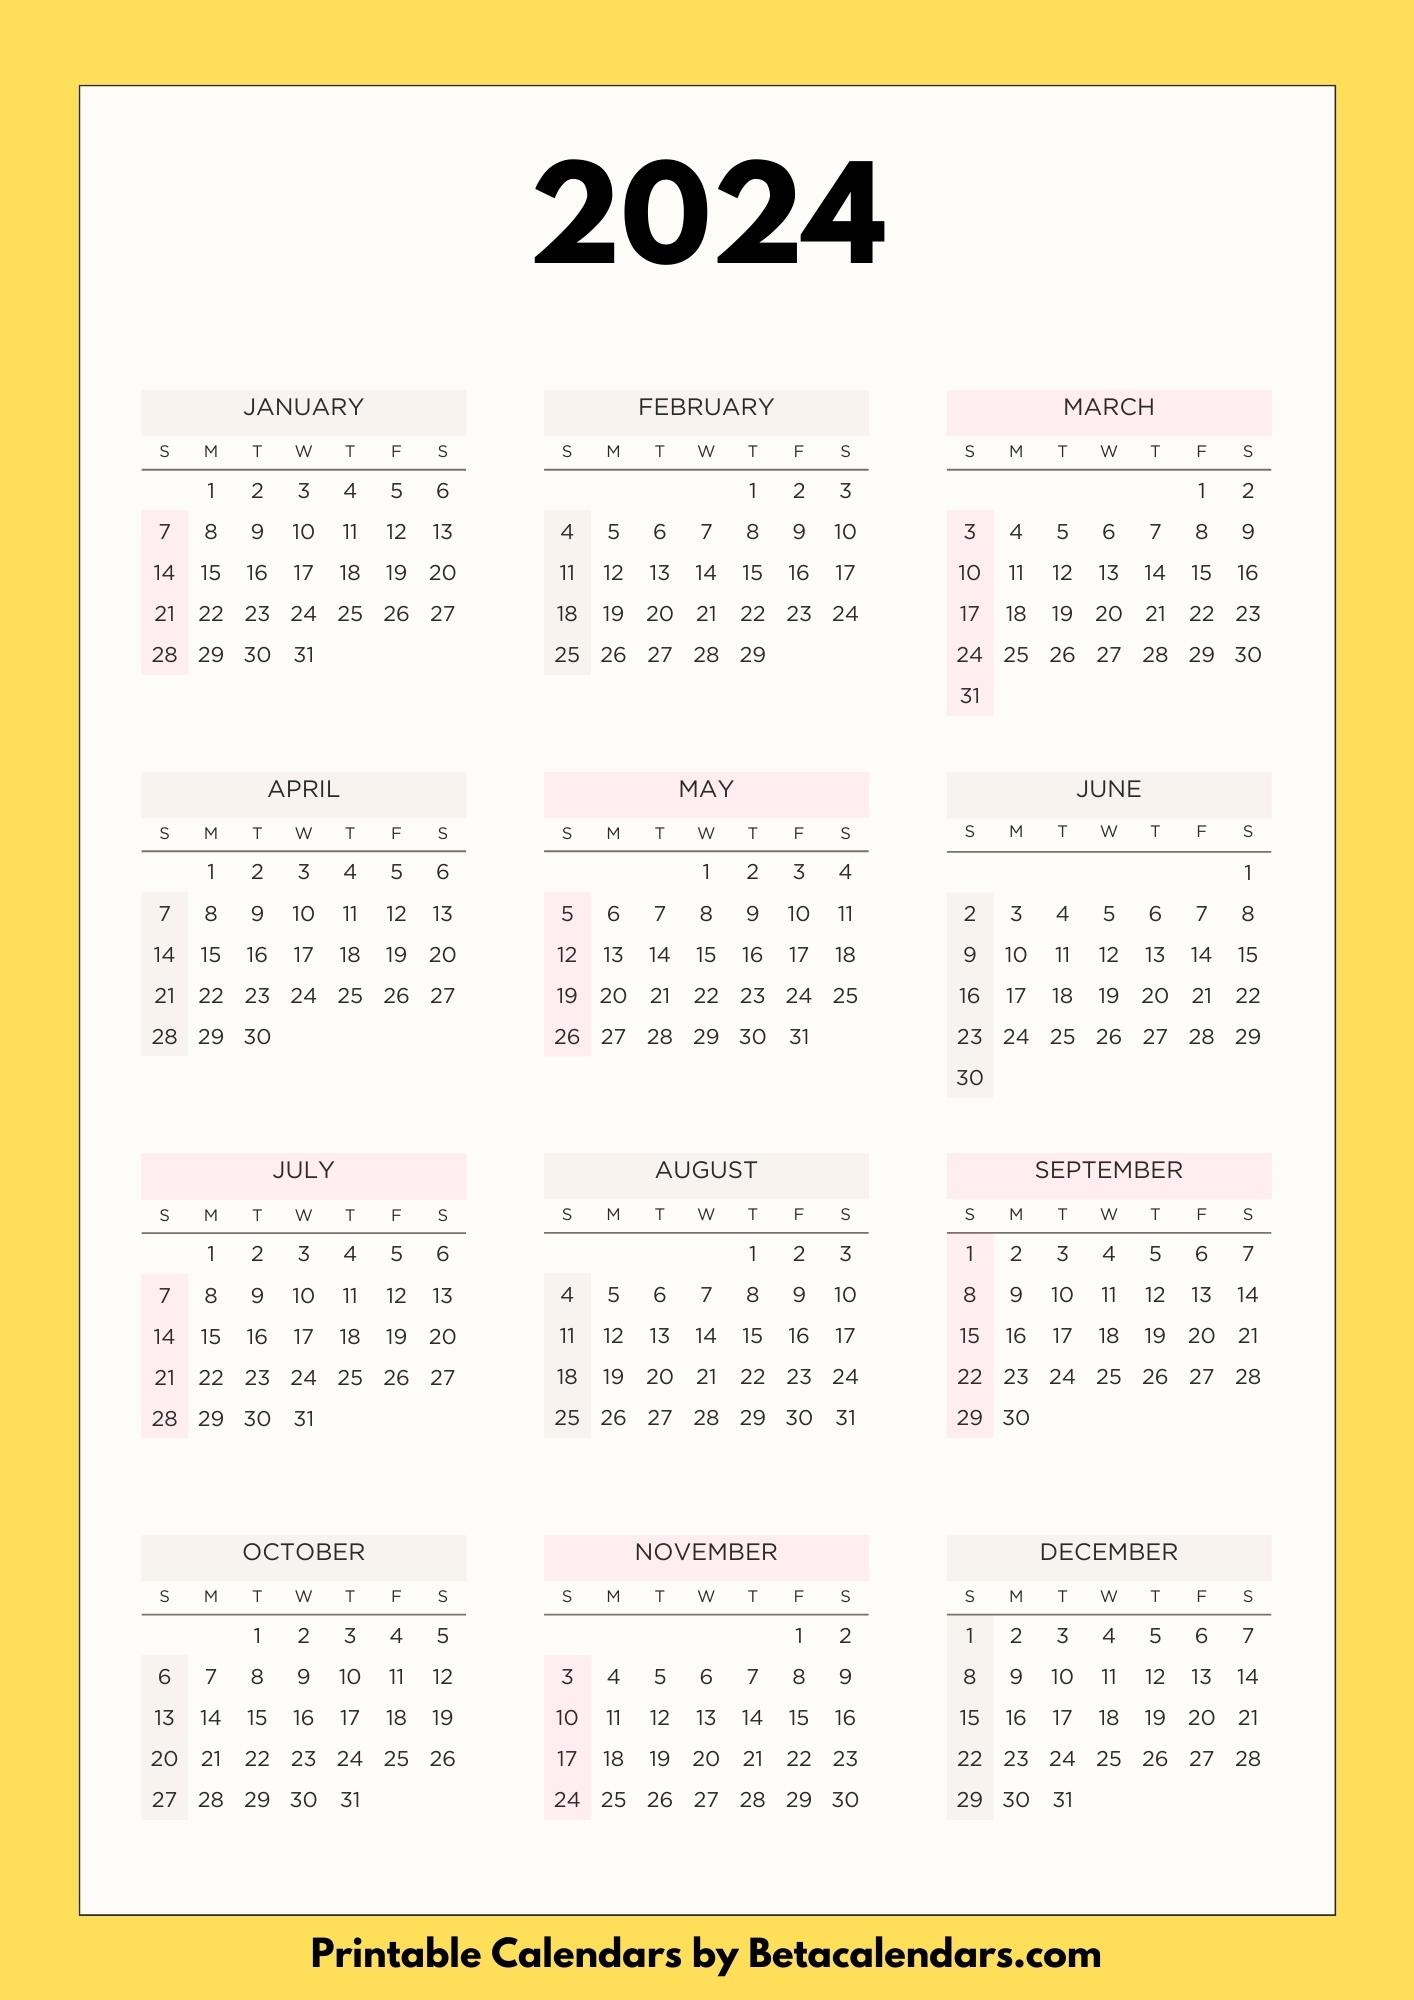 2024 Calendar - Beta Calendars | Time And Date Calendar 2024 Printable